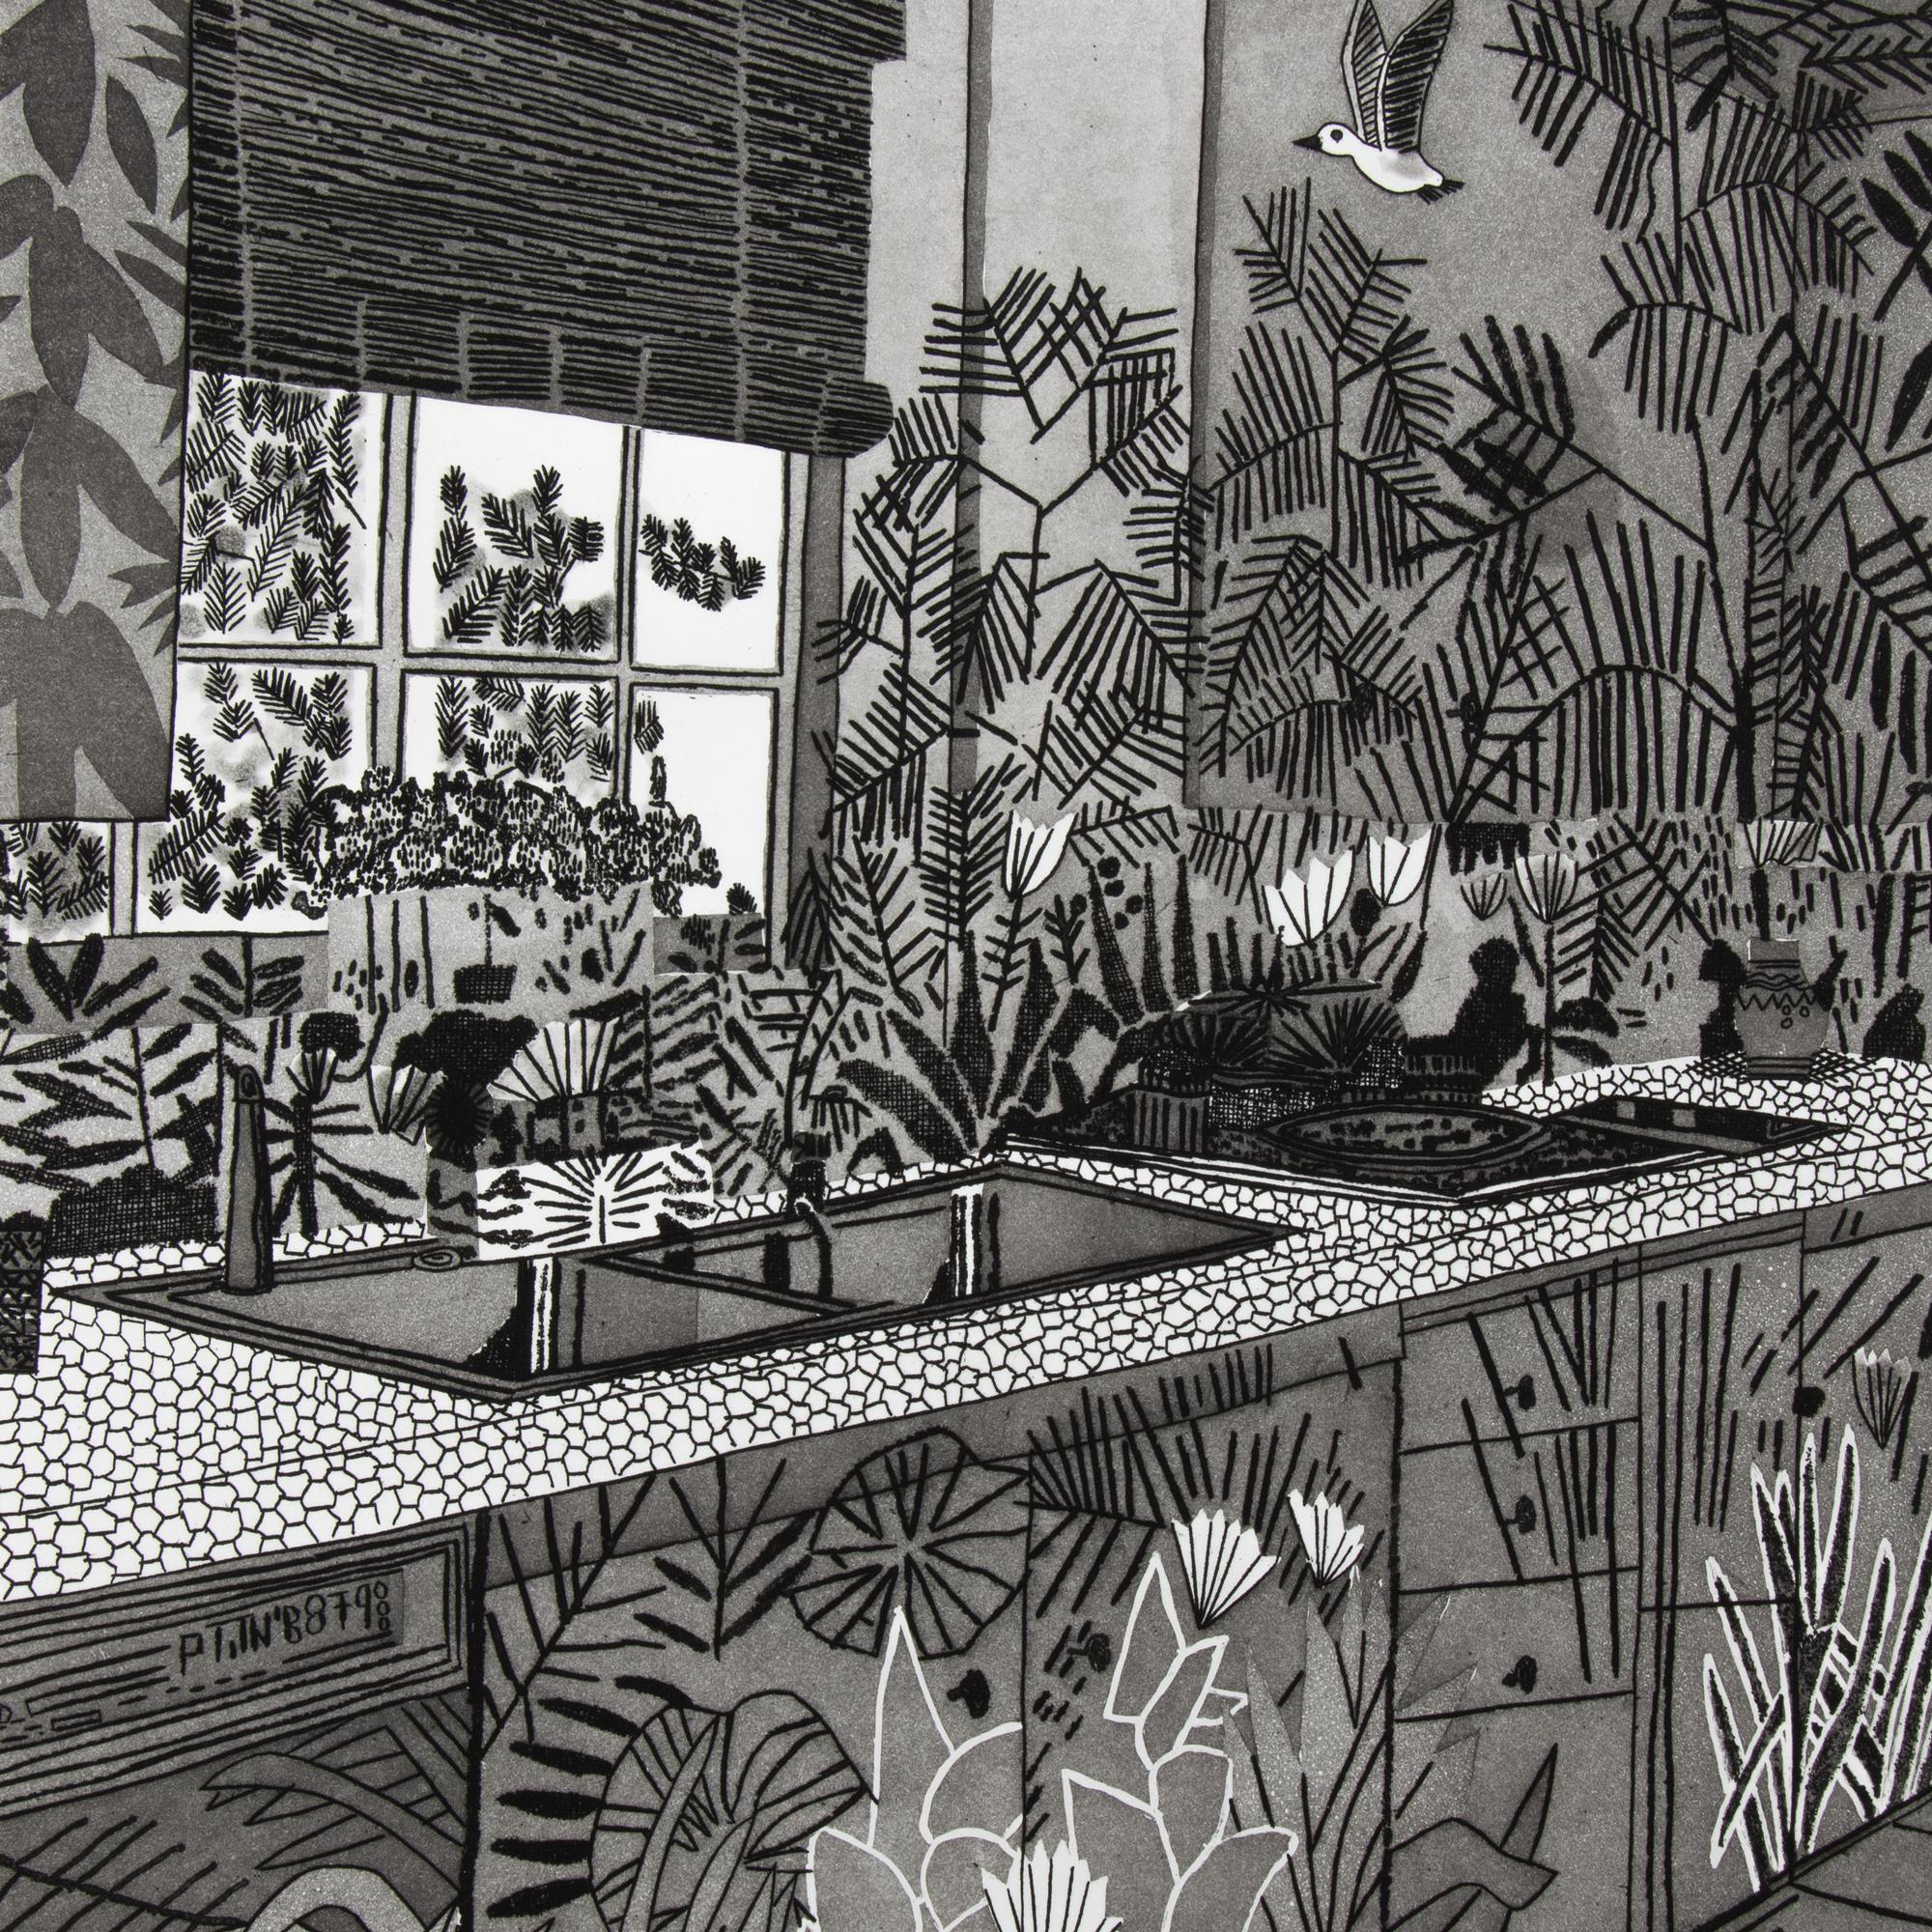 Jonas Wood - Jungle Kitchen, Signed Print, Contemporary Art, Etching, Aquatint 2